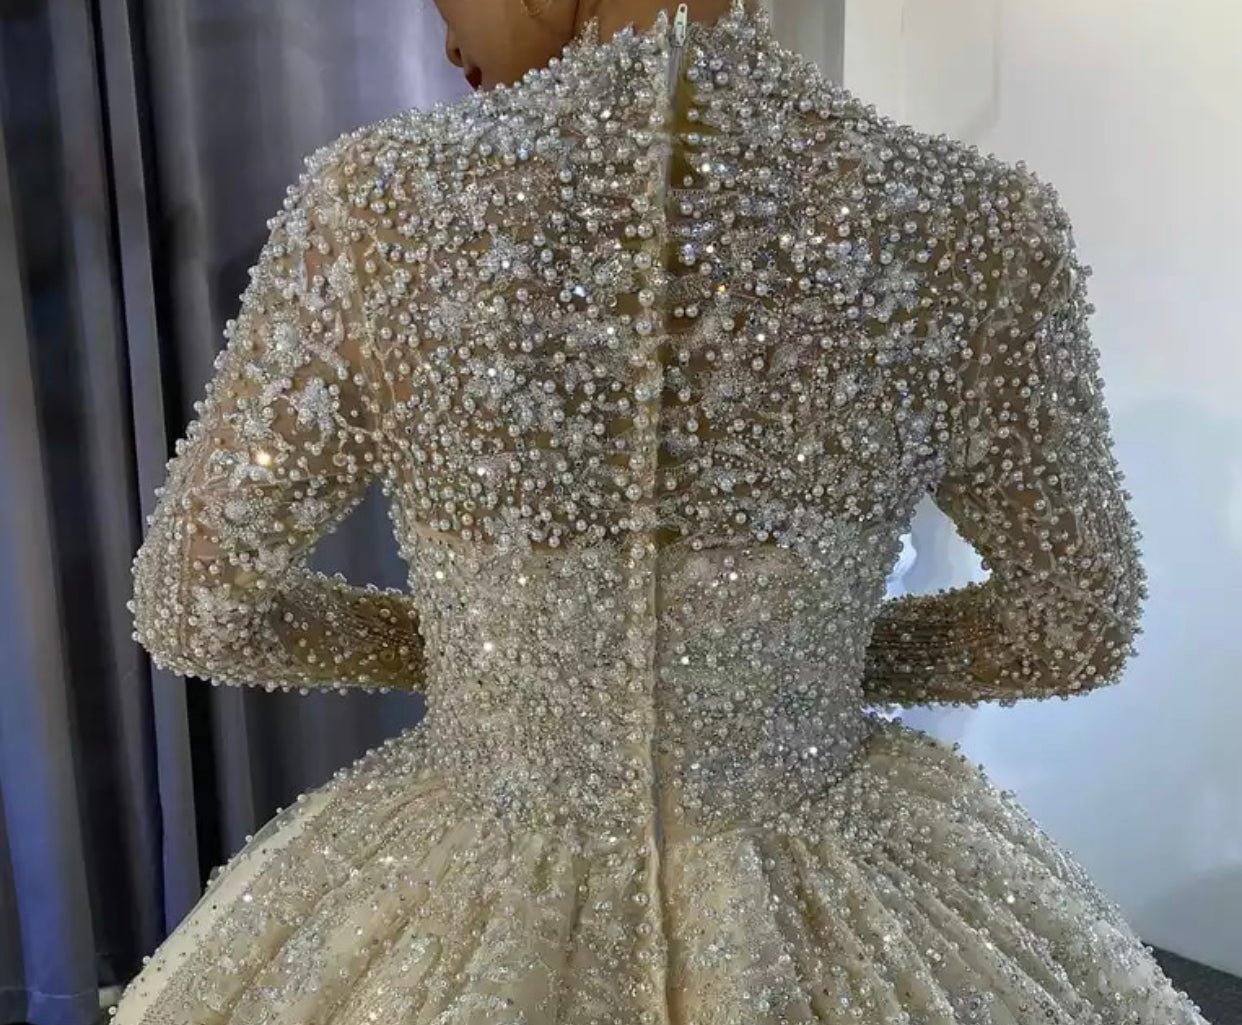 Full Pearls Luxury Wedding Gown - Mscooco.co.uk